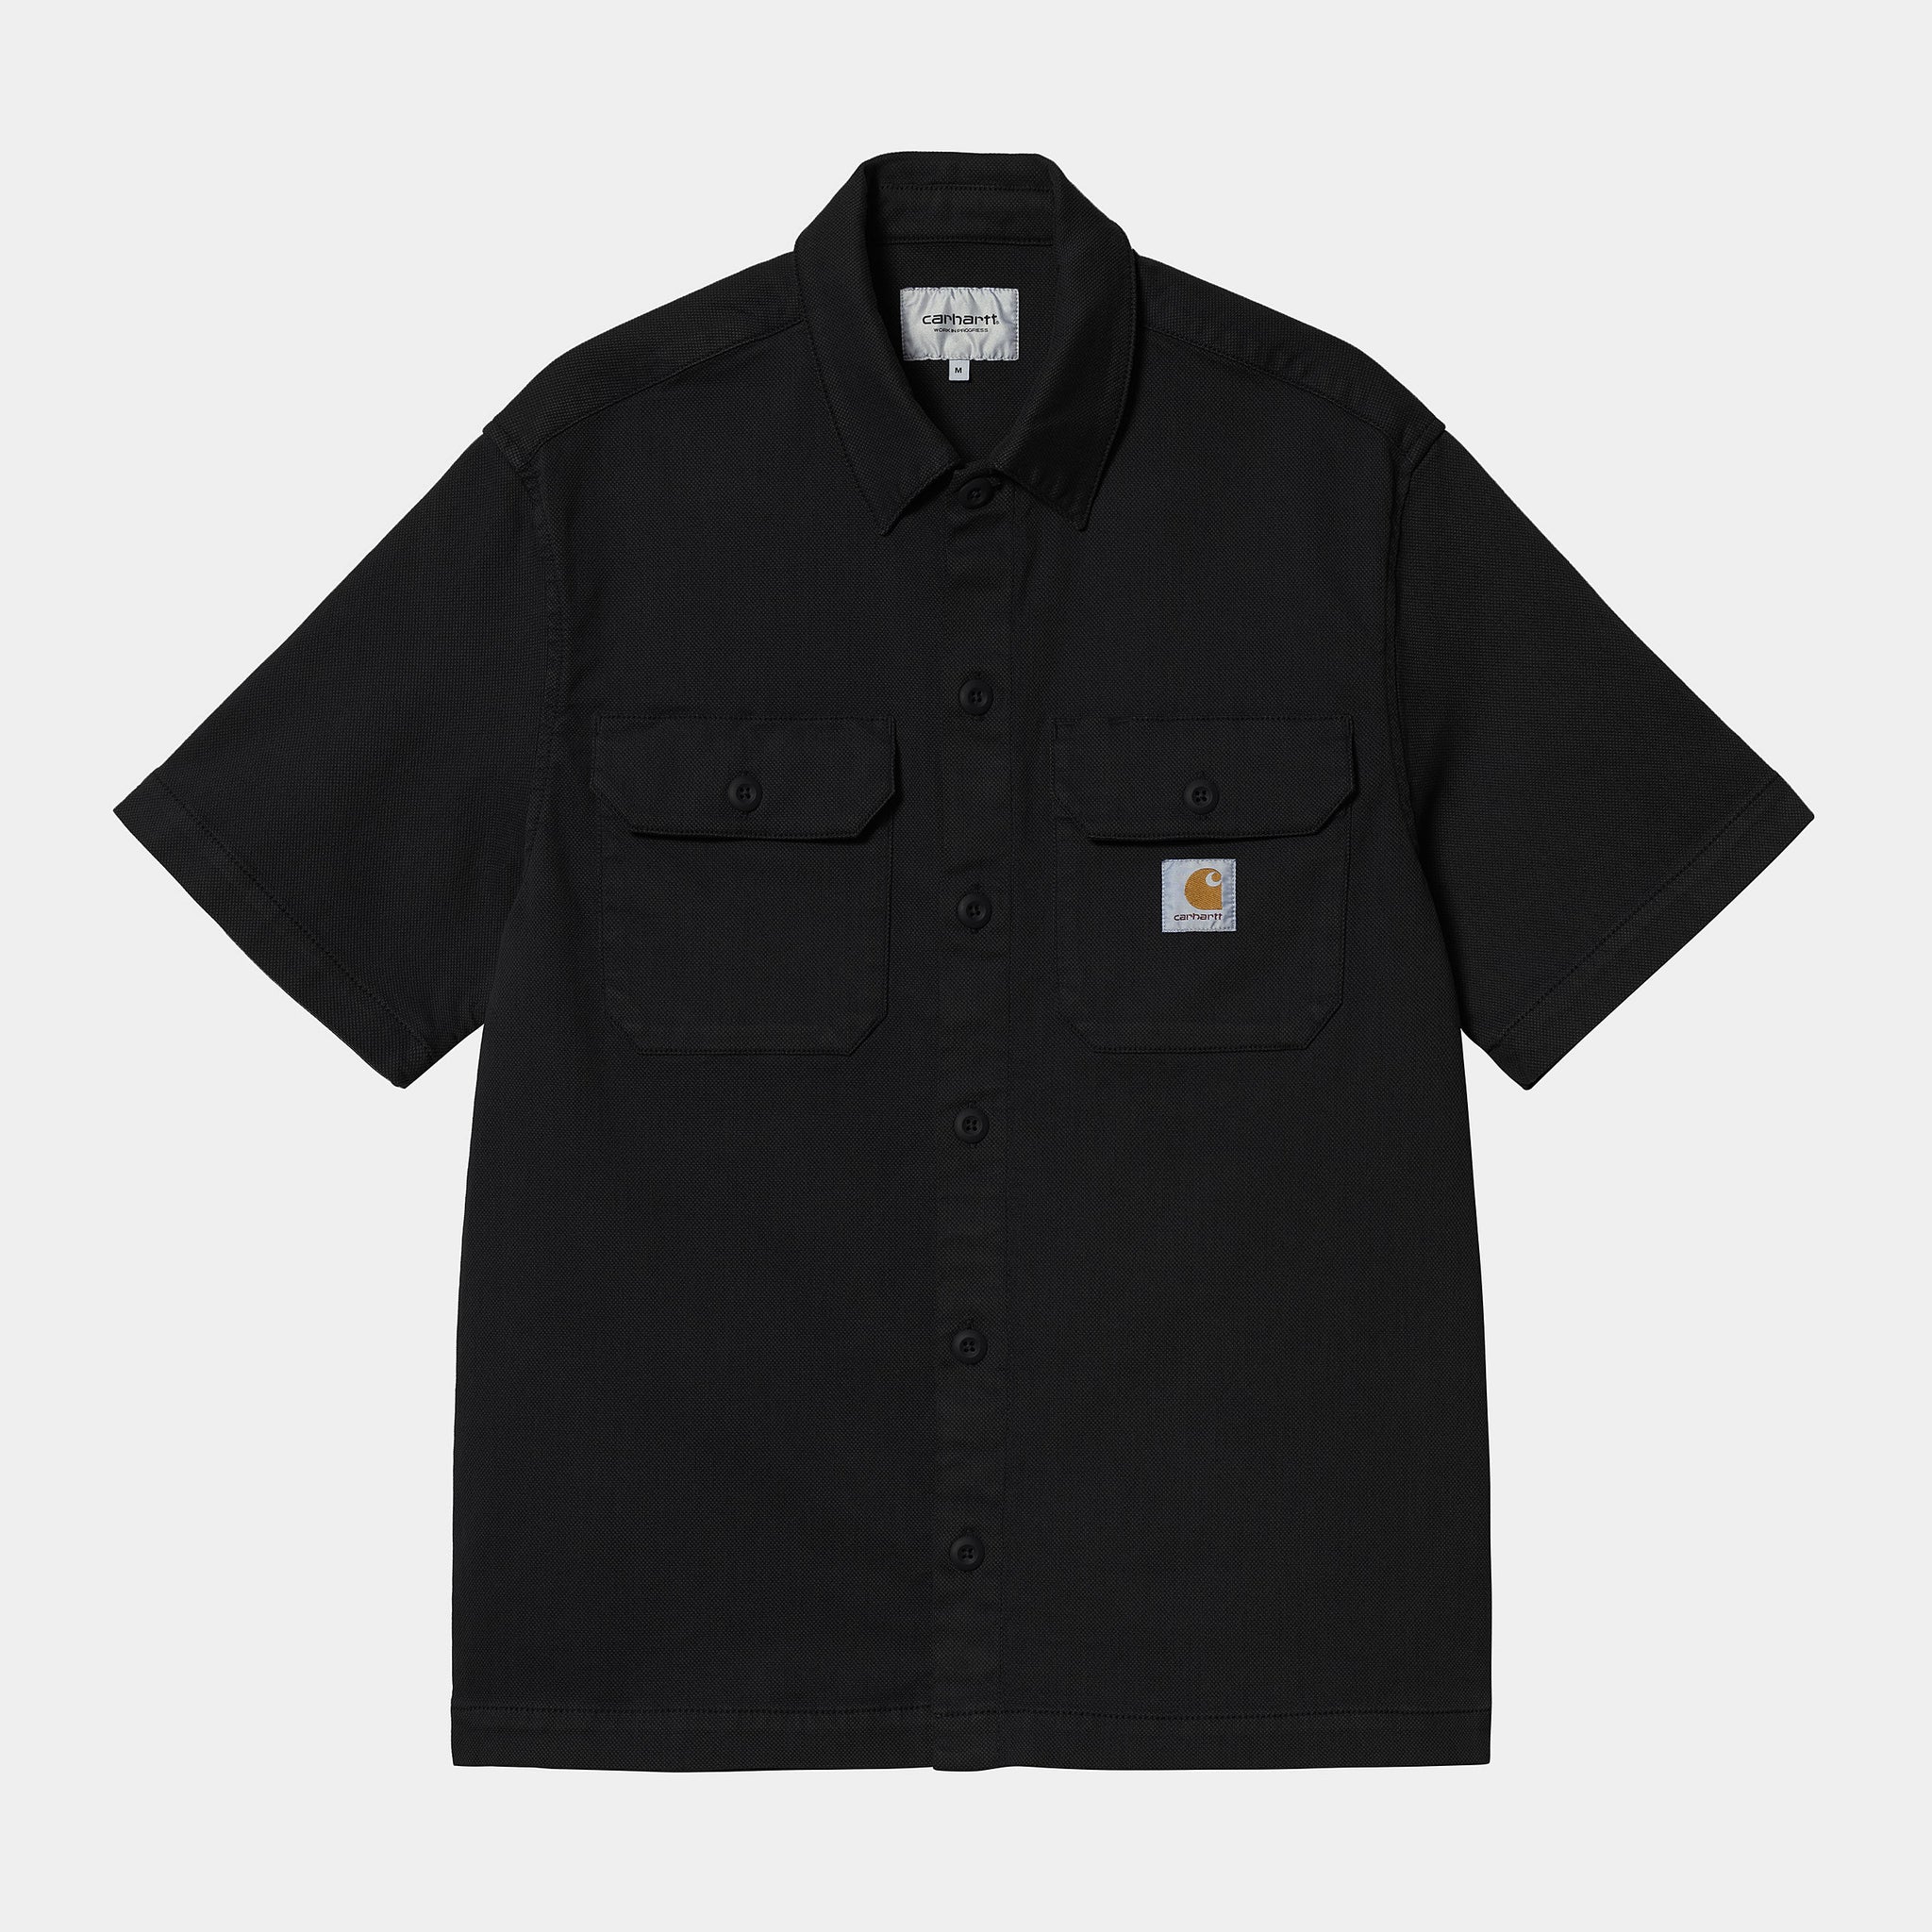 Carhartt S/S Craft Shirt Black